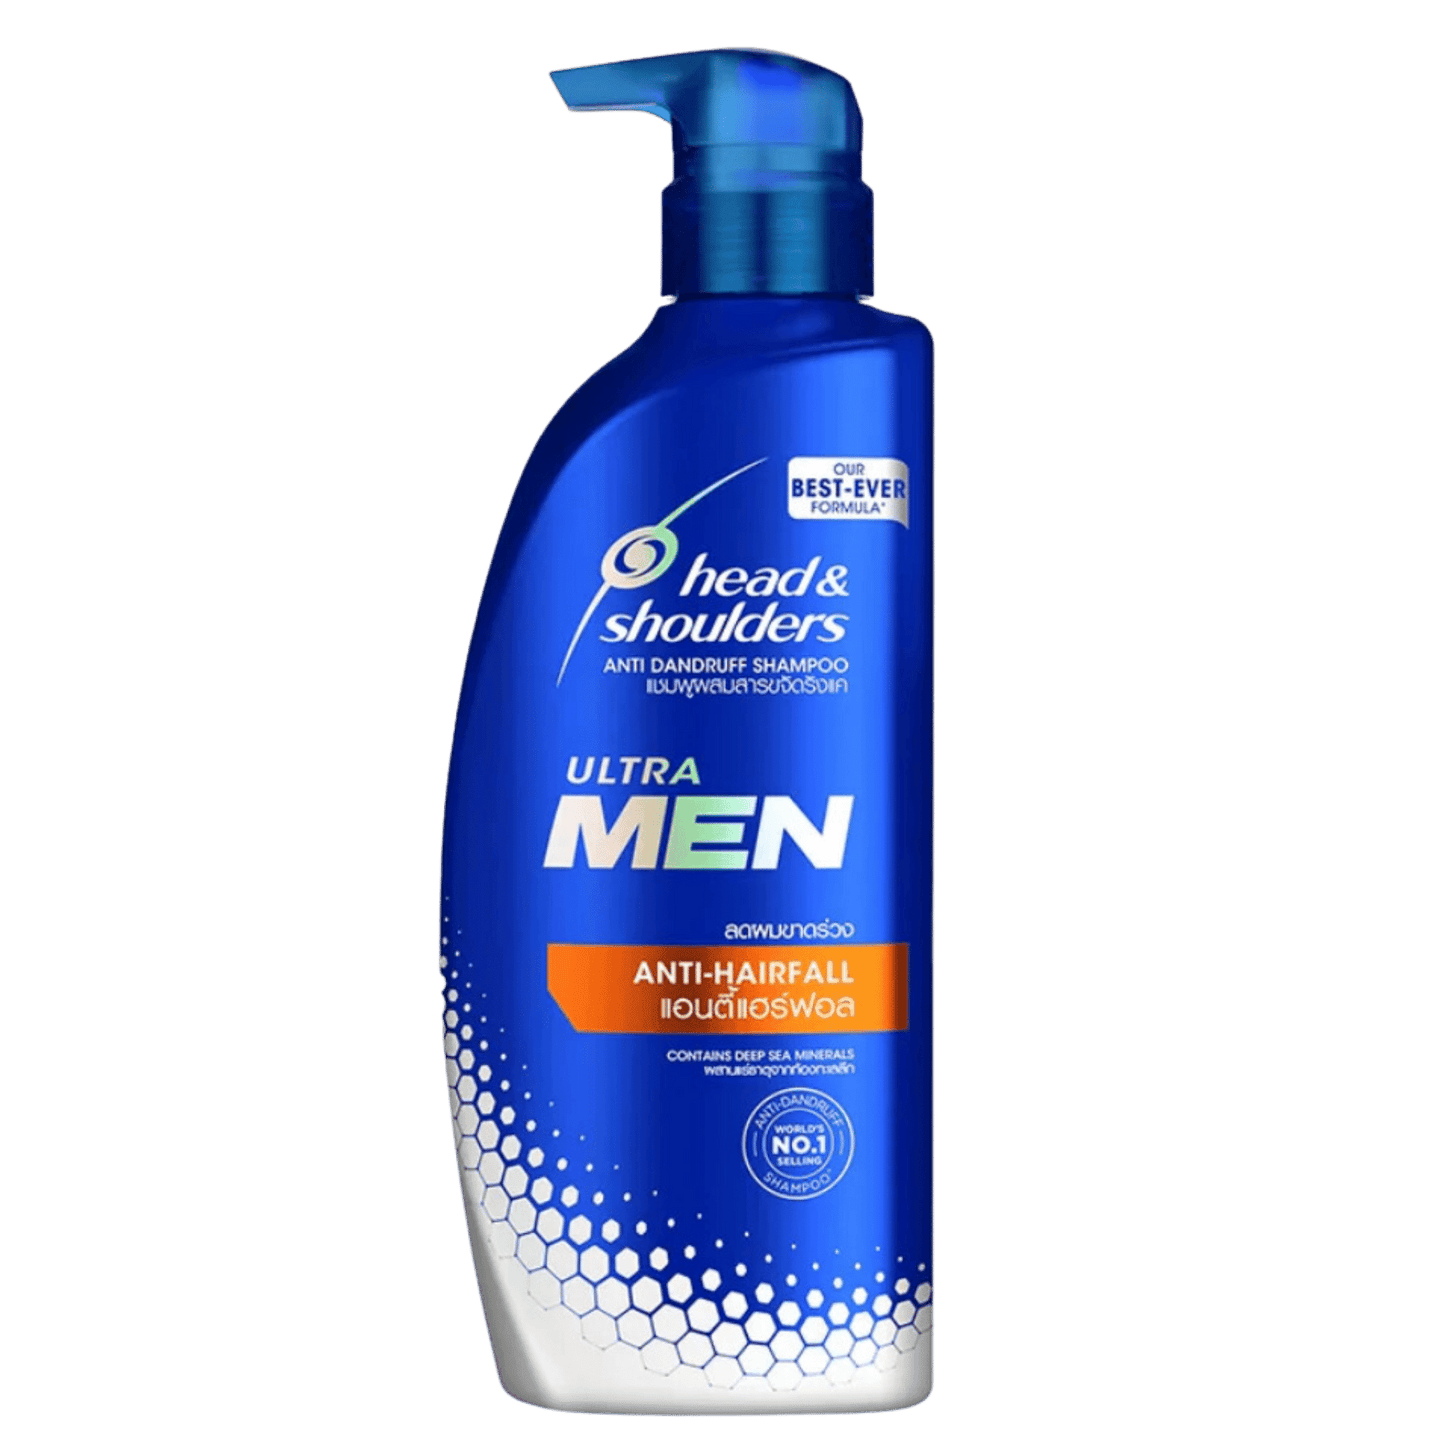 Head & Shoulders Ultra Men Anti-Hairfall Shampoo 480 ml Skin Stash in Pakistan